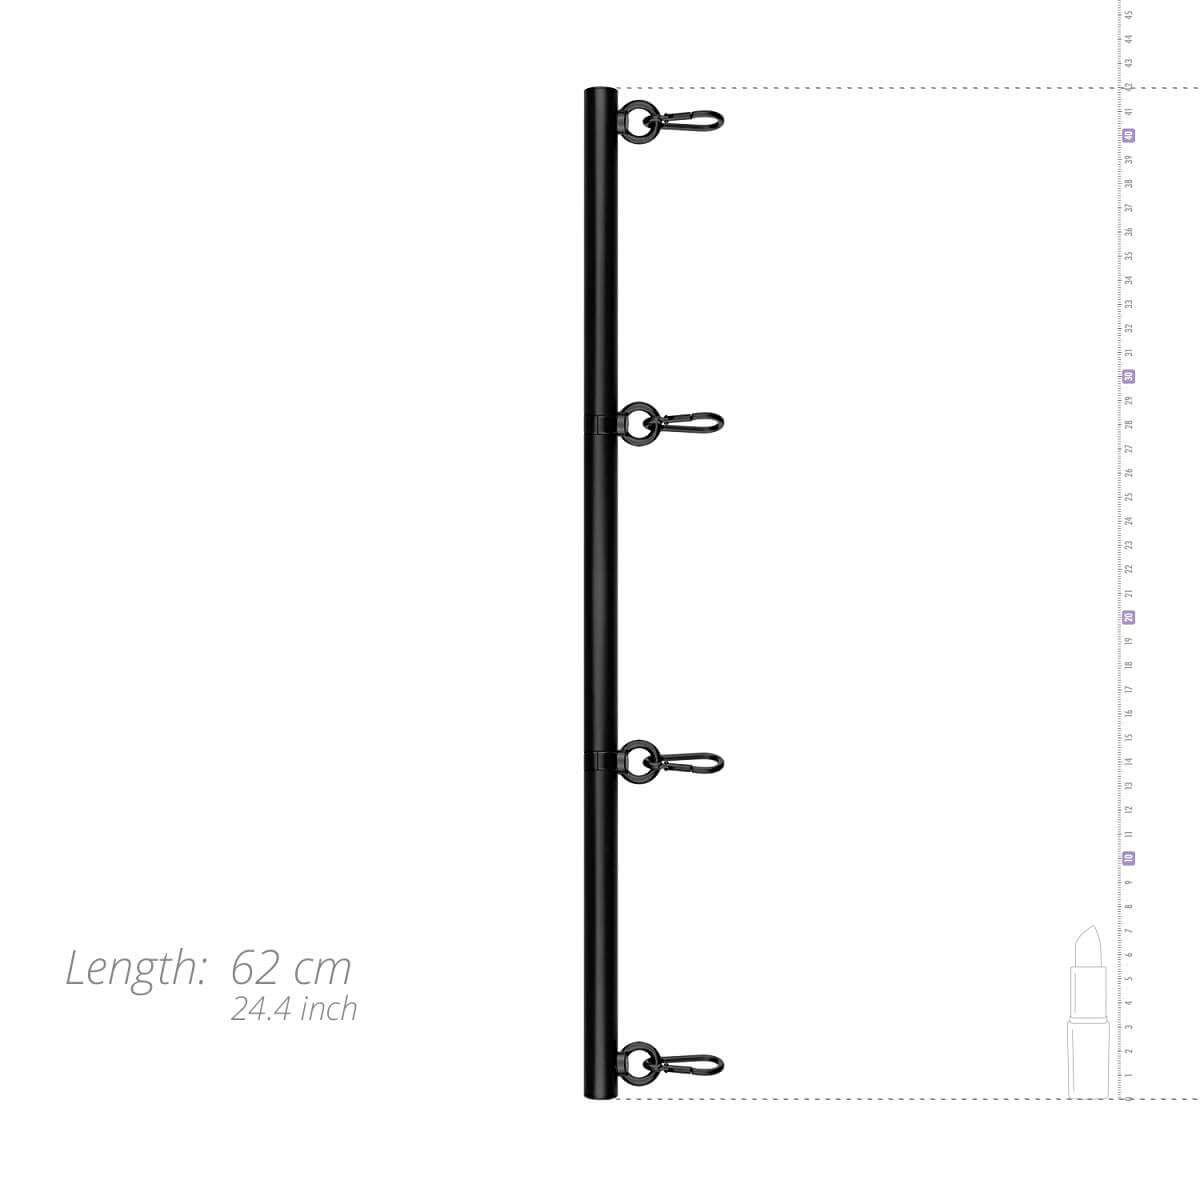 Bedroom Fantasies Adjustable Spreader Bar (Black), bondážní roztahovací tyč